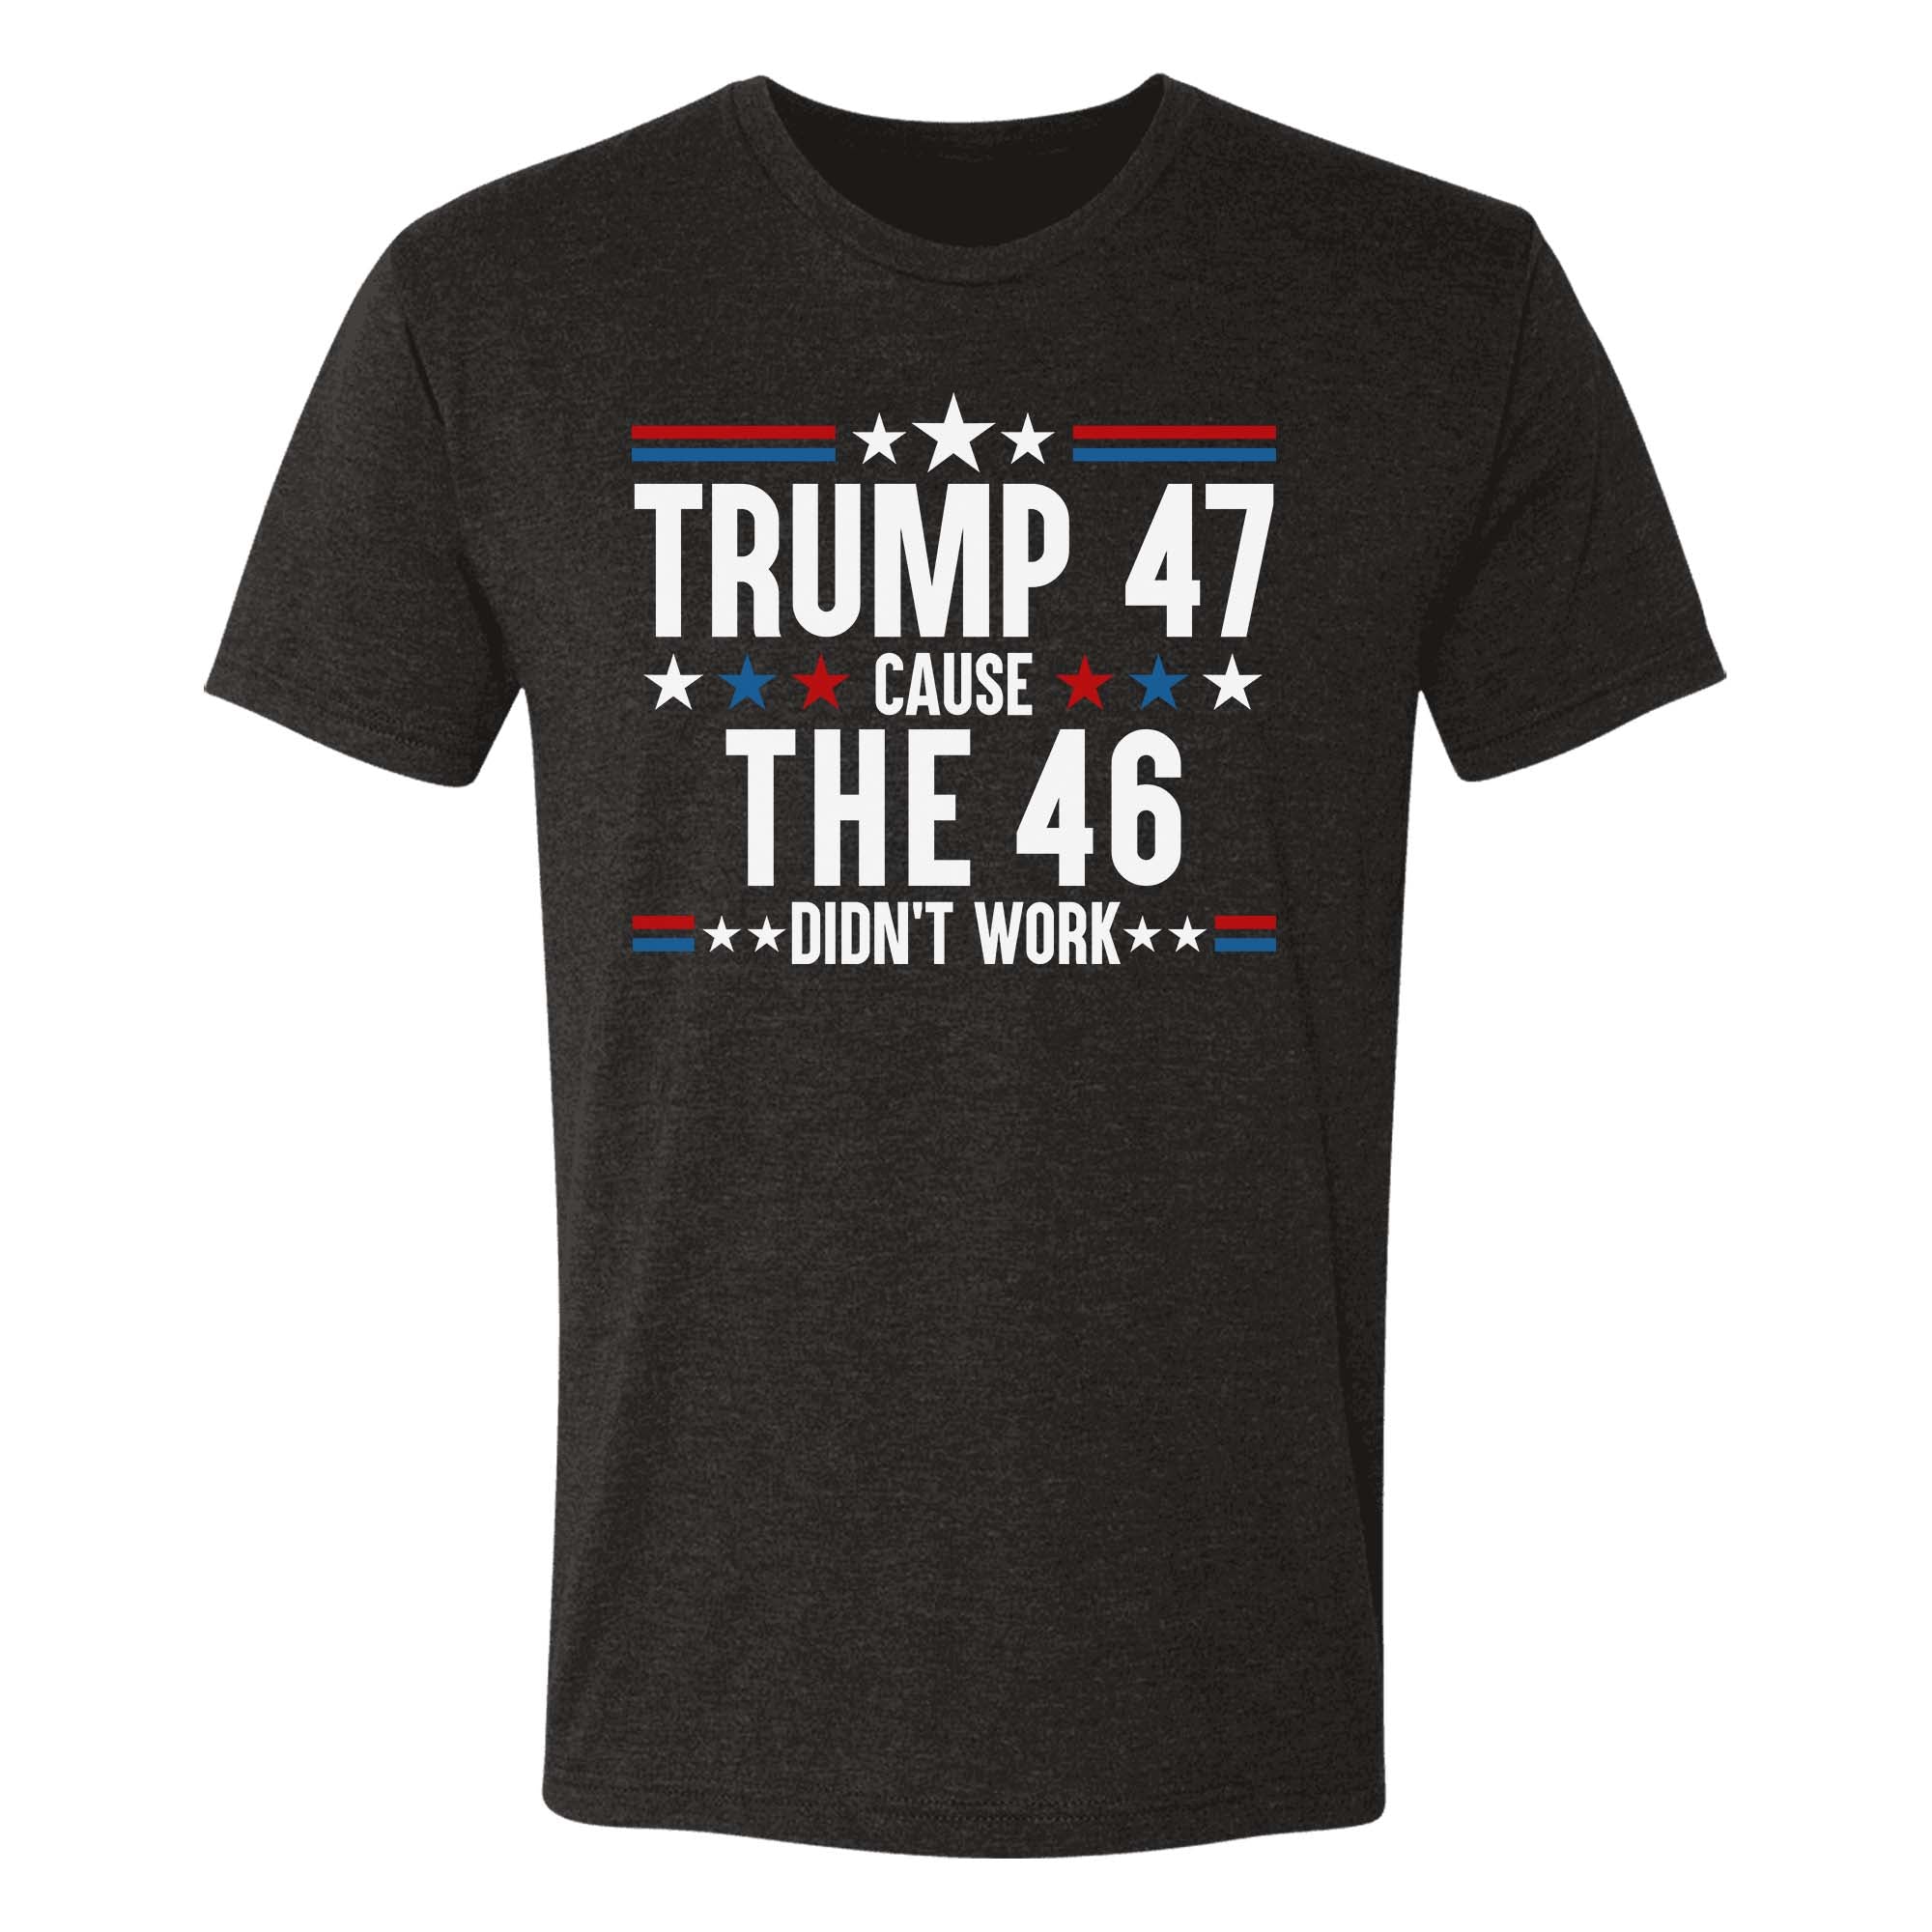 Trump 47 Cause The 46 Didn't Work T-Shirt - GB83